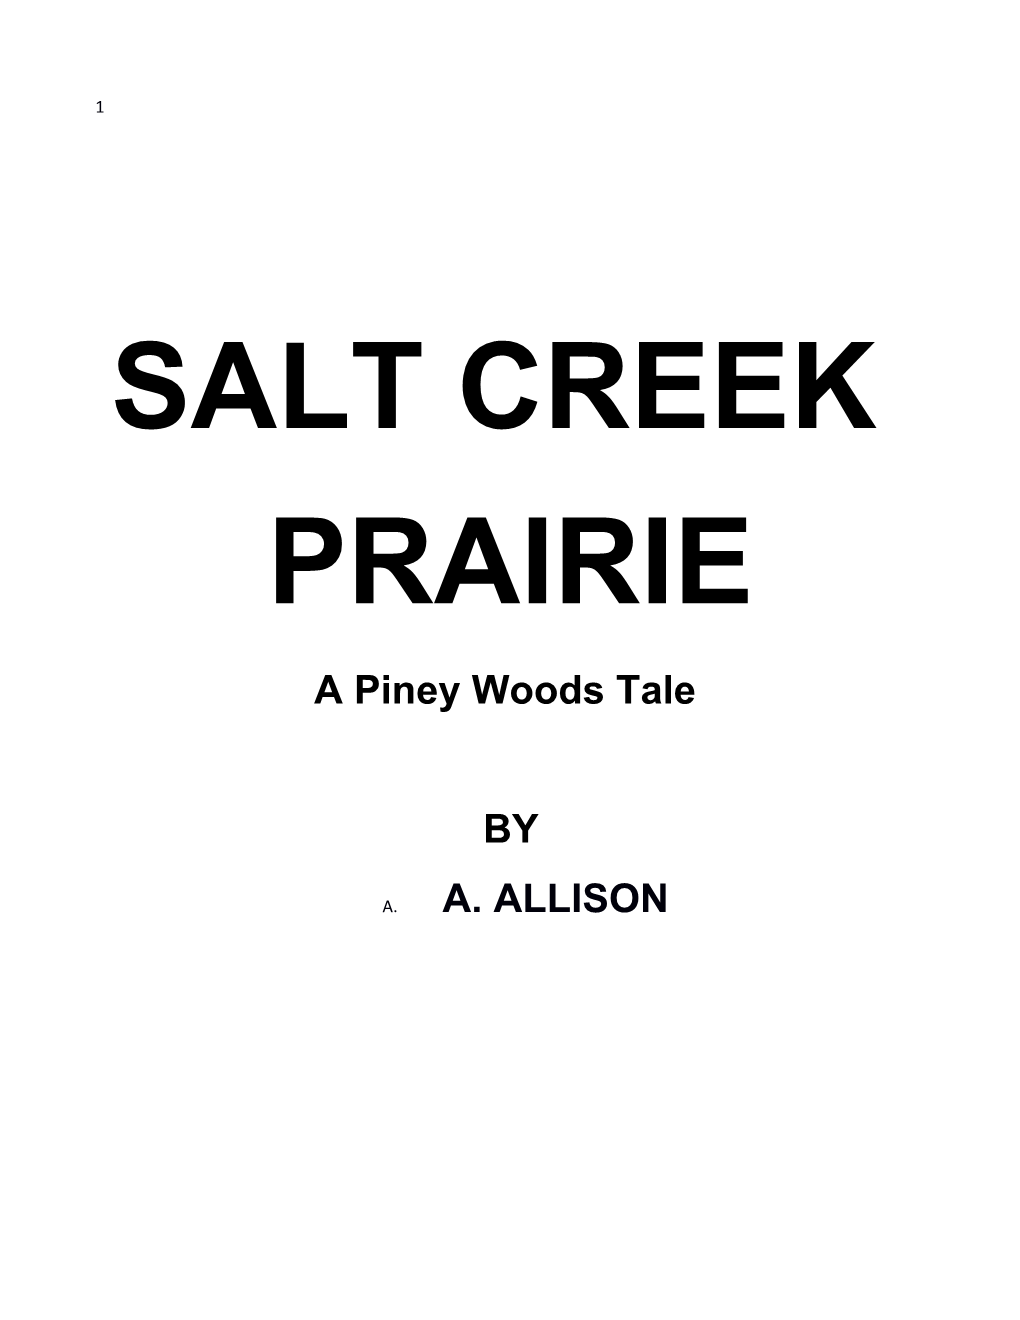 A Piney Woods Tale